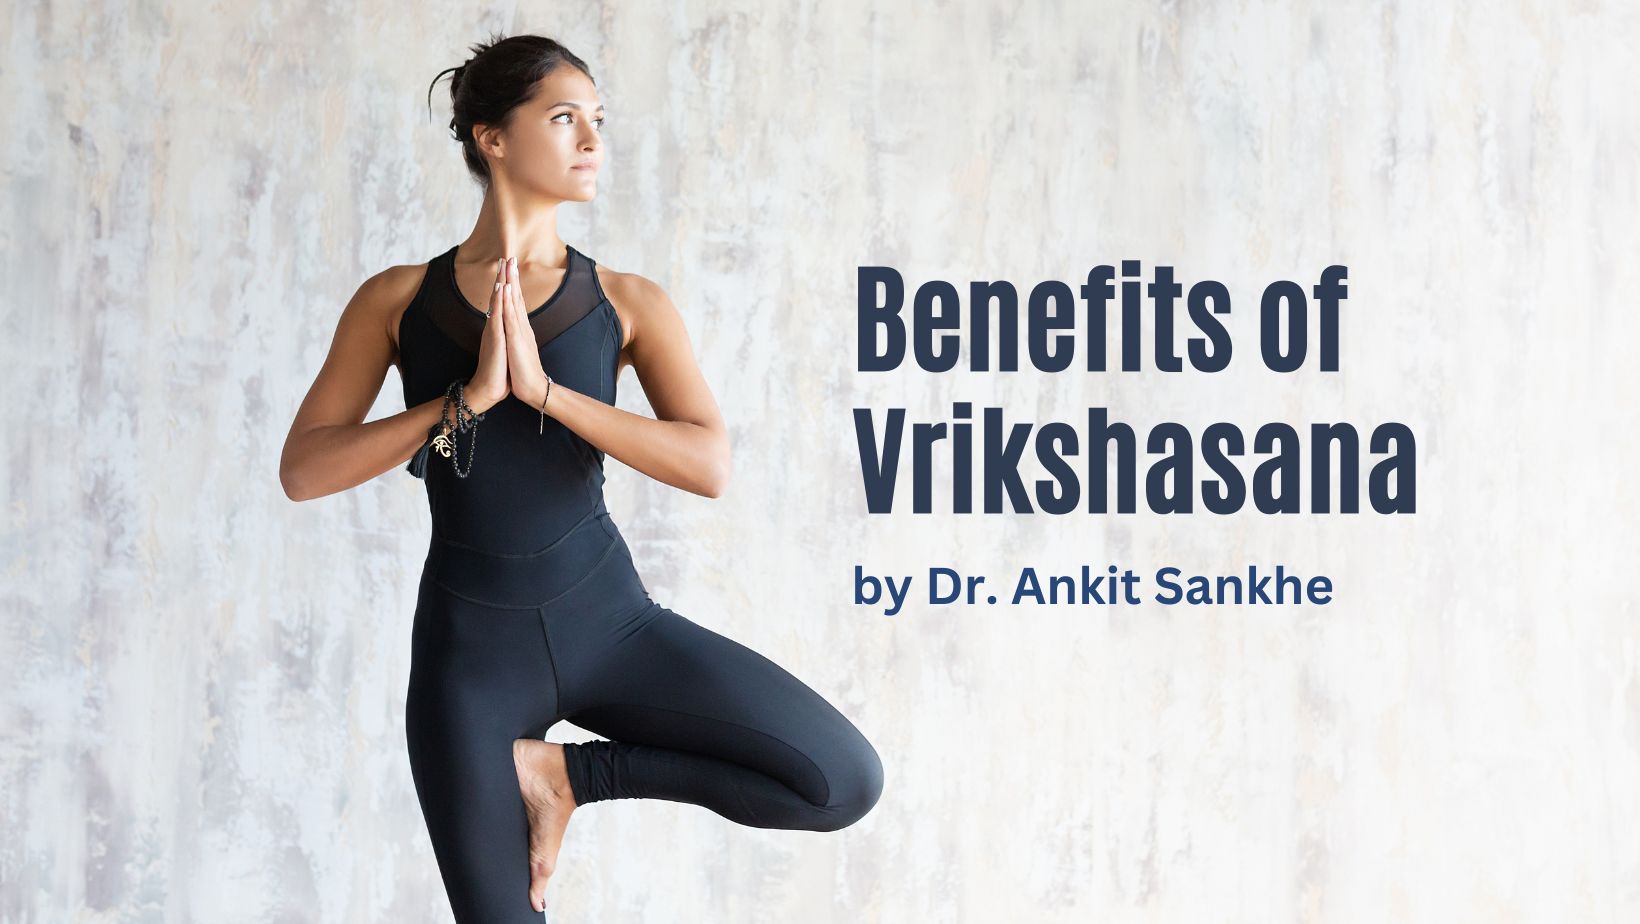 Vrikshasana Tree Pose | V Hymavathi | Audien Tv #yoga #yogaeverydamnday  #yogalife #yogainspiration - YouTube